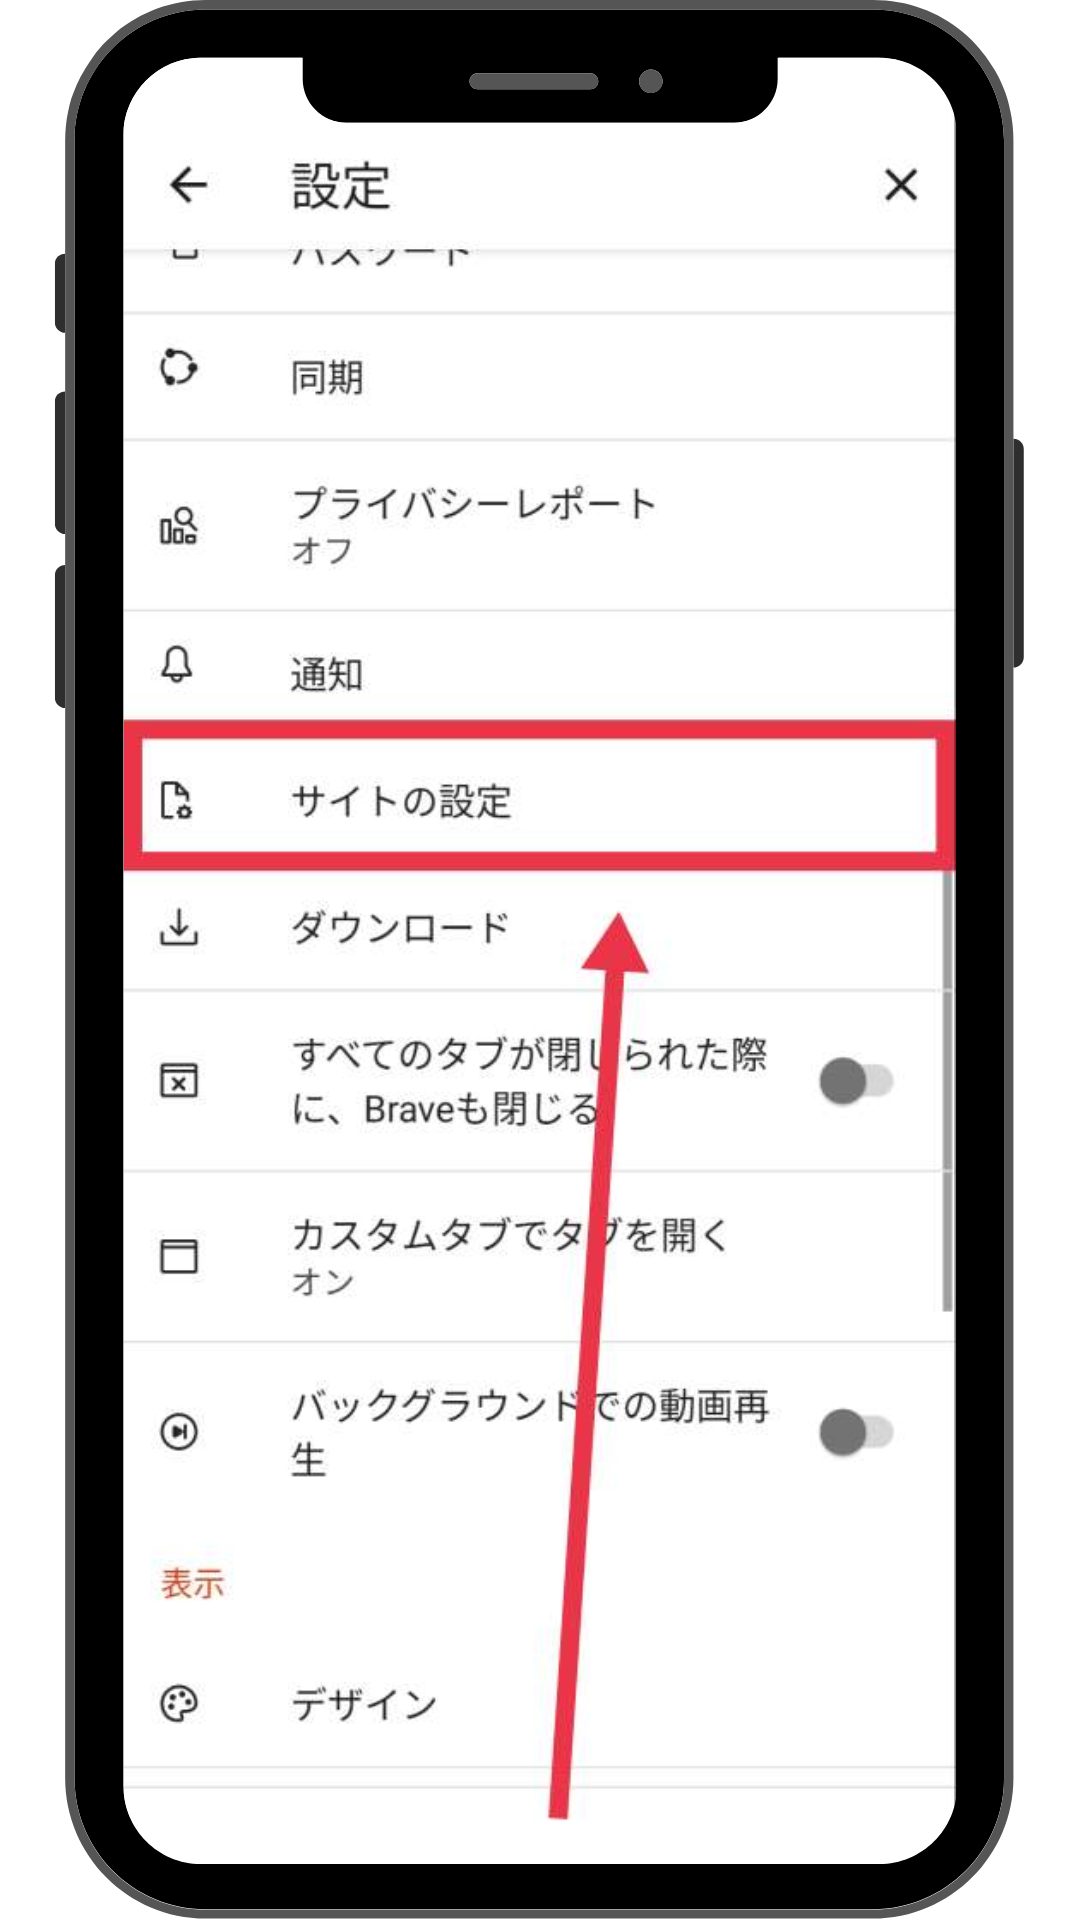 Brave Android版 サイトの設定をする方法2